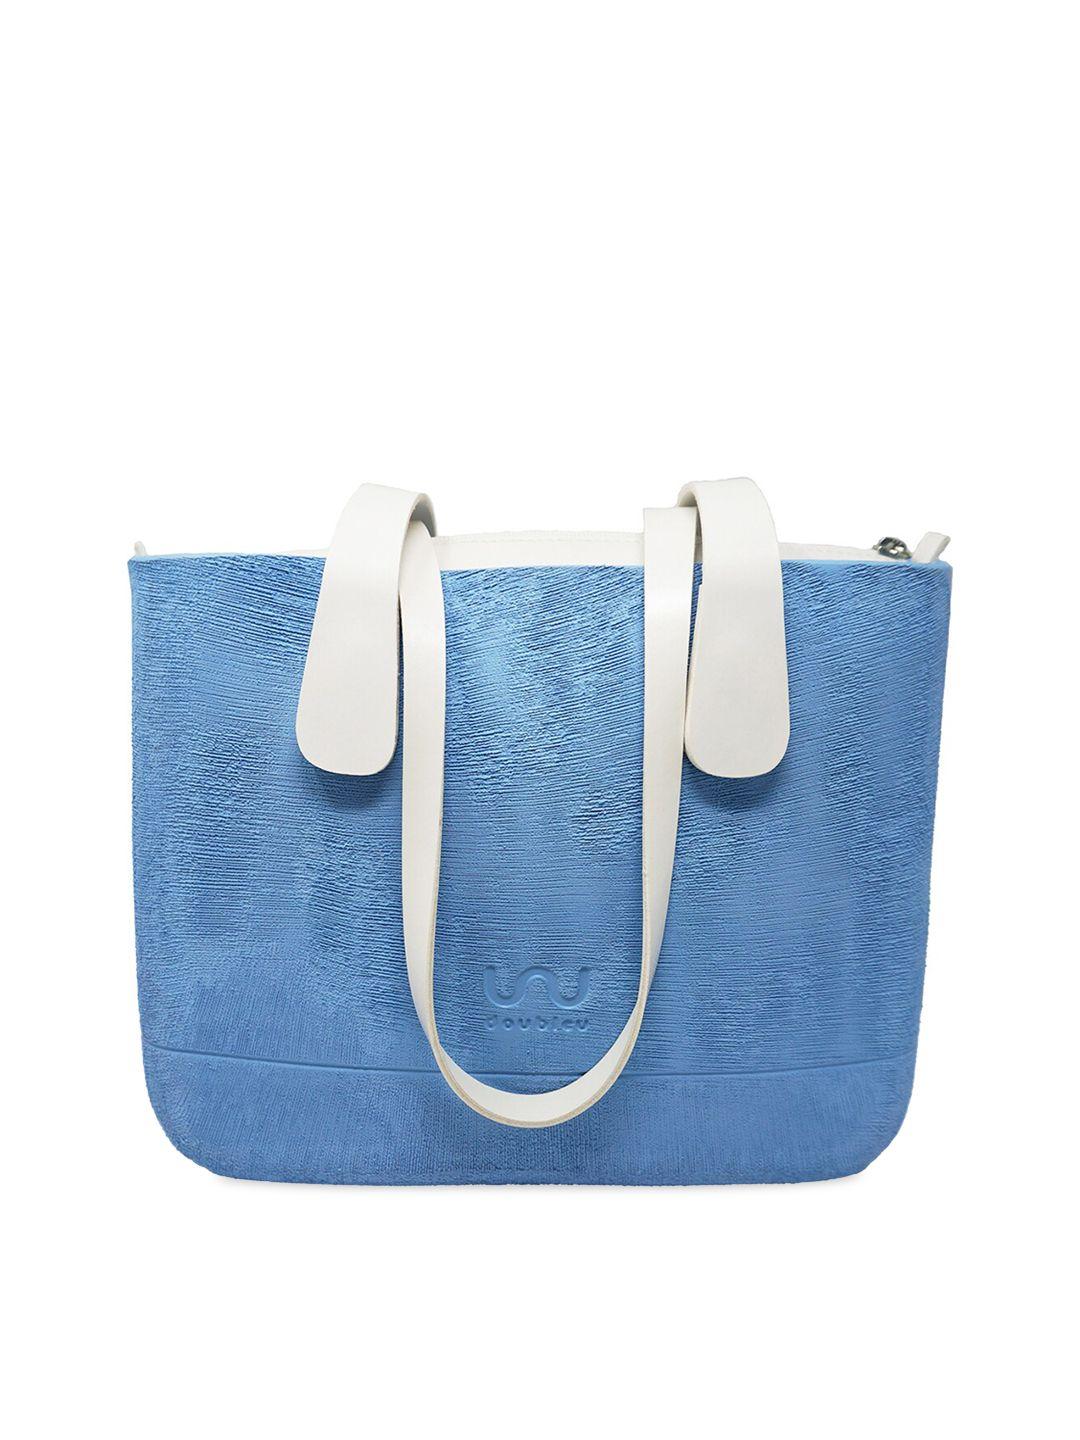 doubleu blue textured shoulder bag